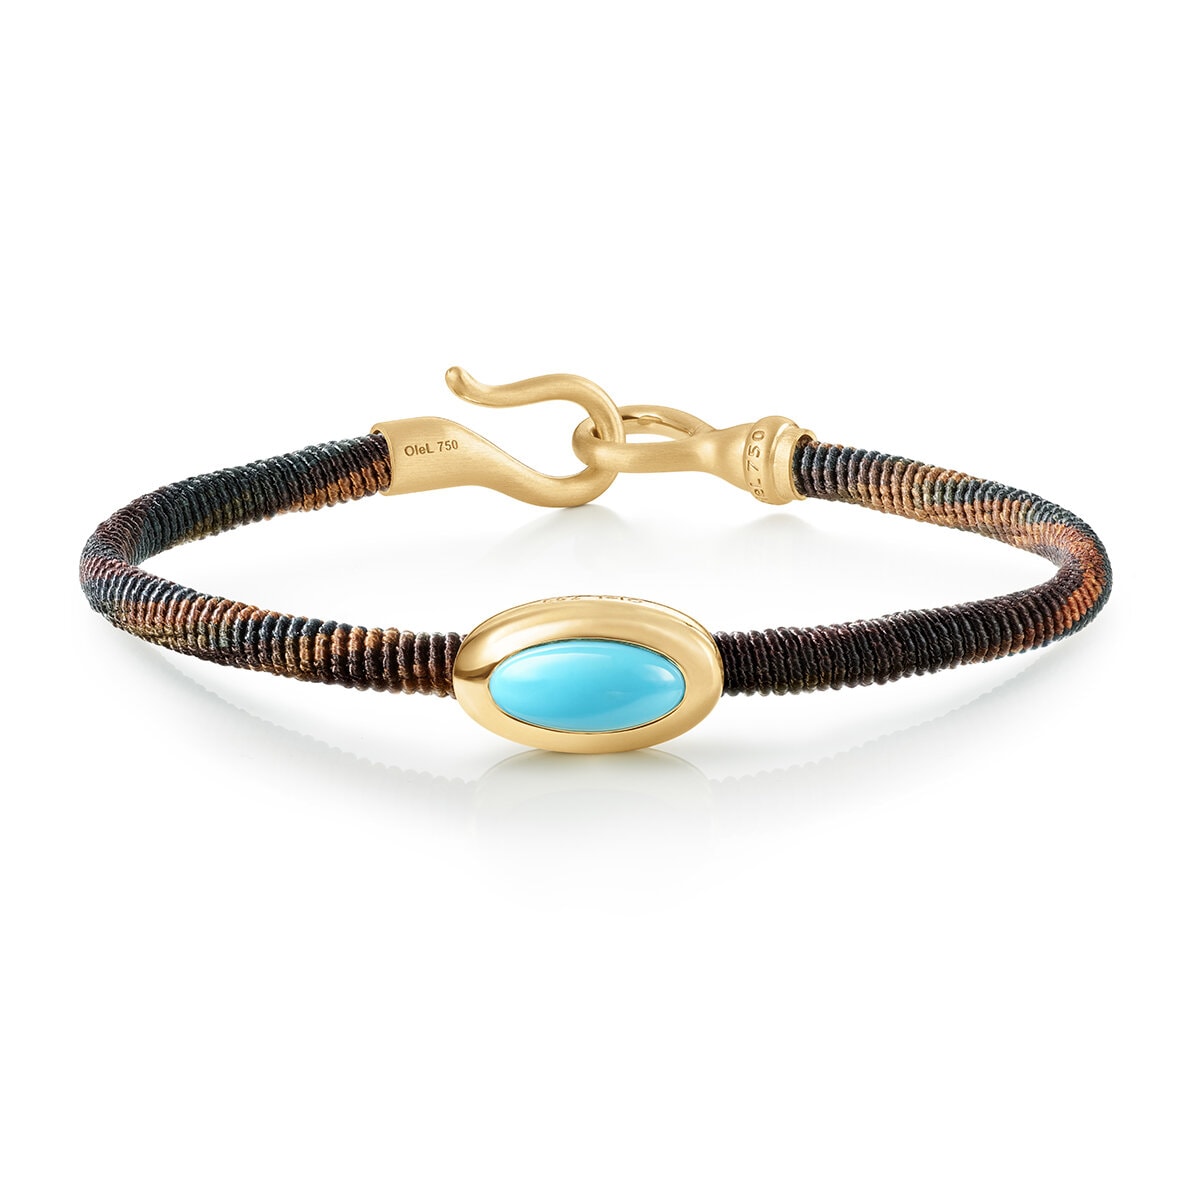 Life bracelet with turquoise